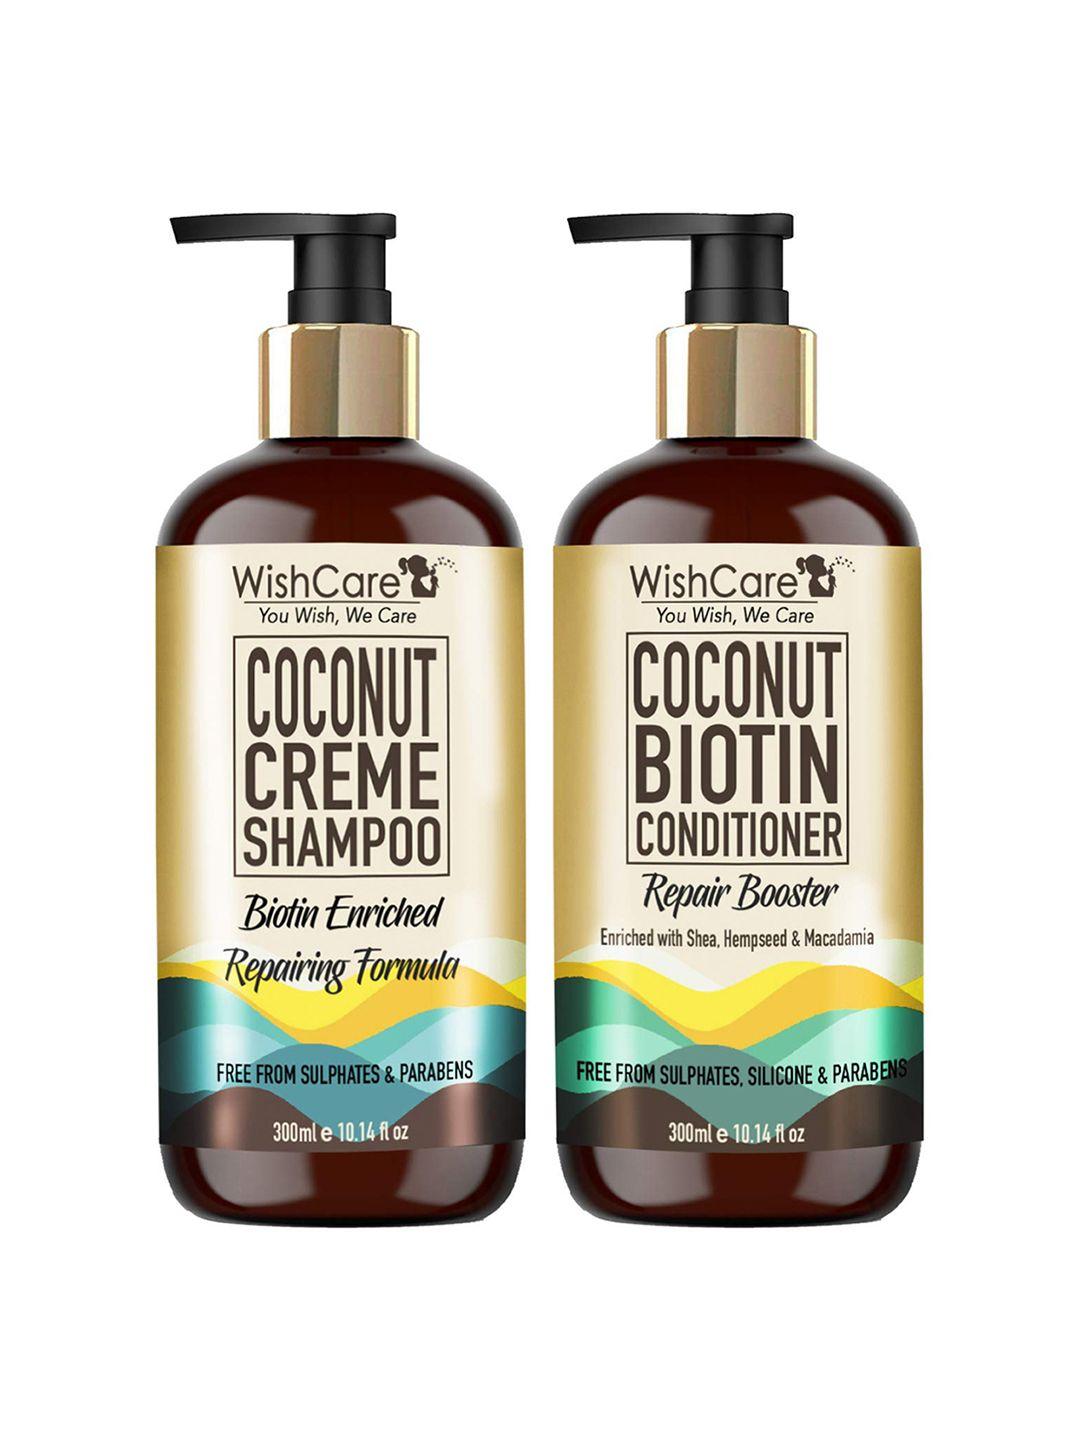 wishcare coconut crme shampoo and coconut biotin conditioner - 300 ml each